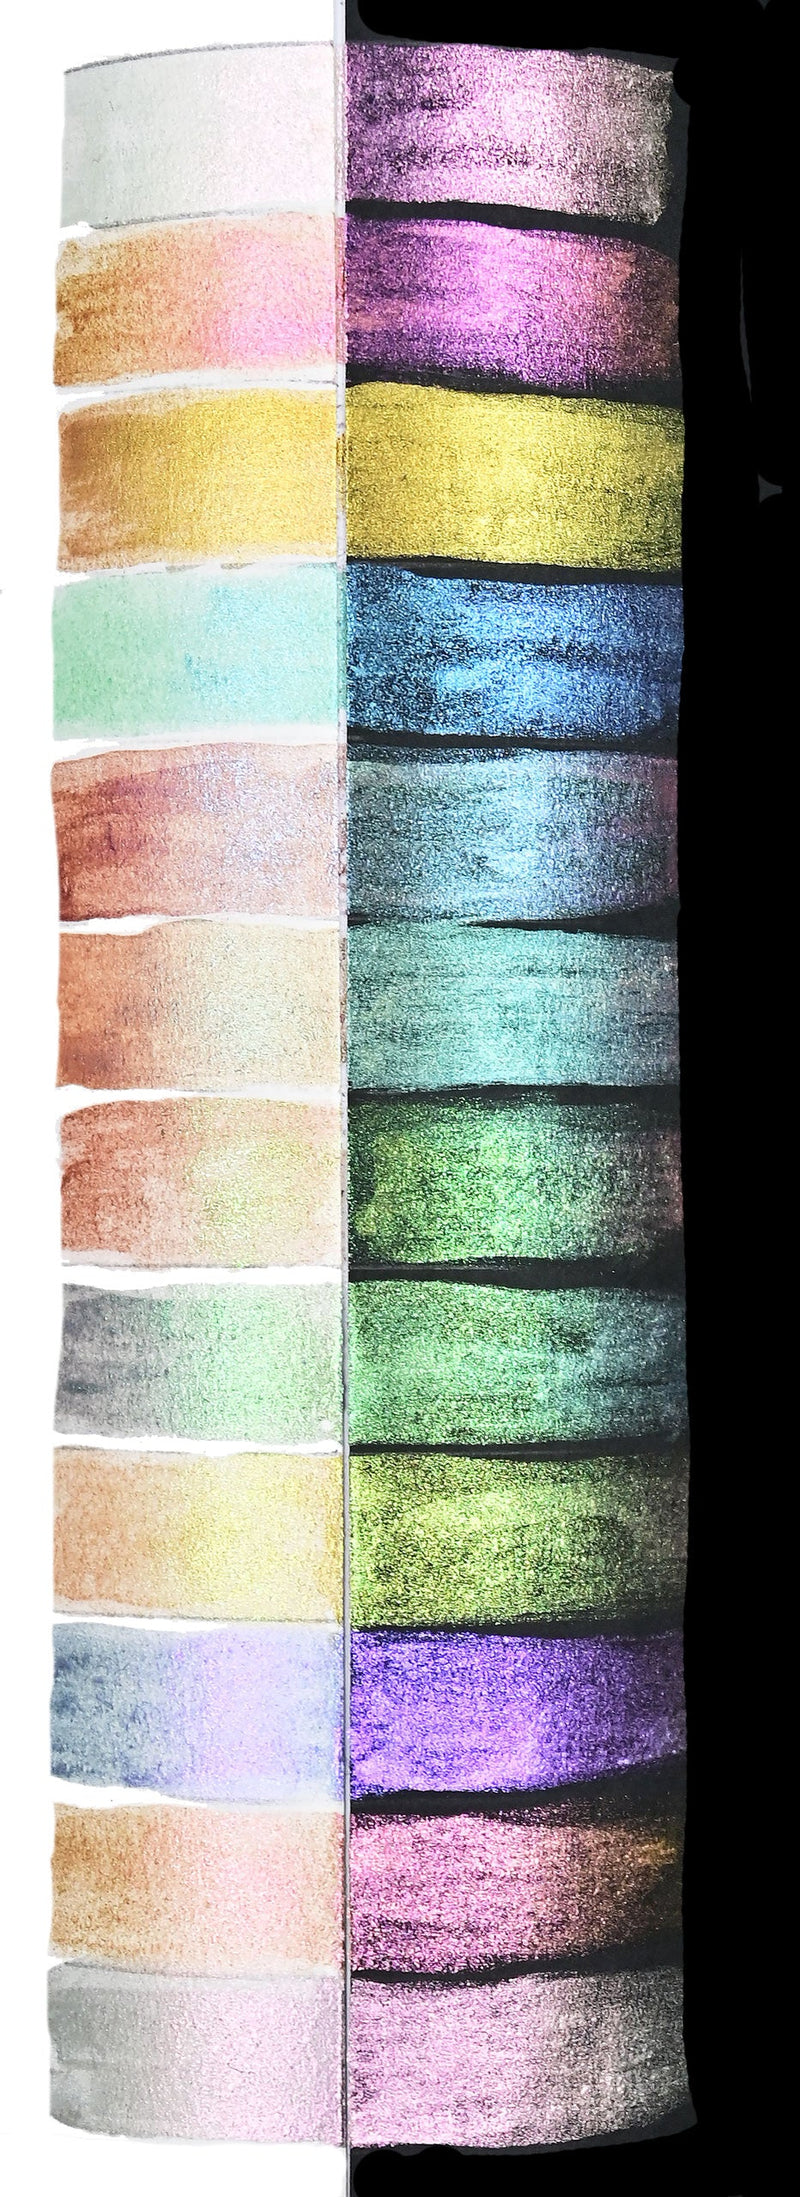 Studio Series Chameleon Iridescent Watercolor Paint Set (12 colors)